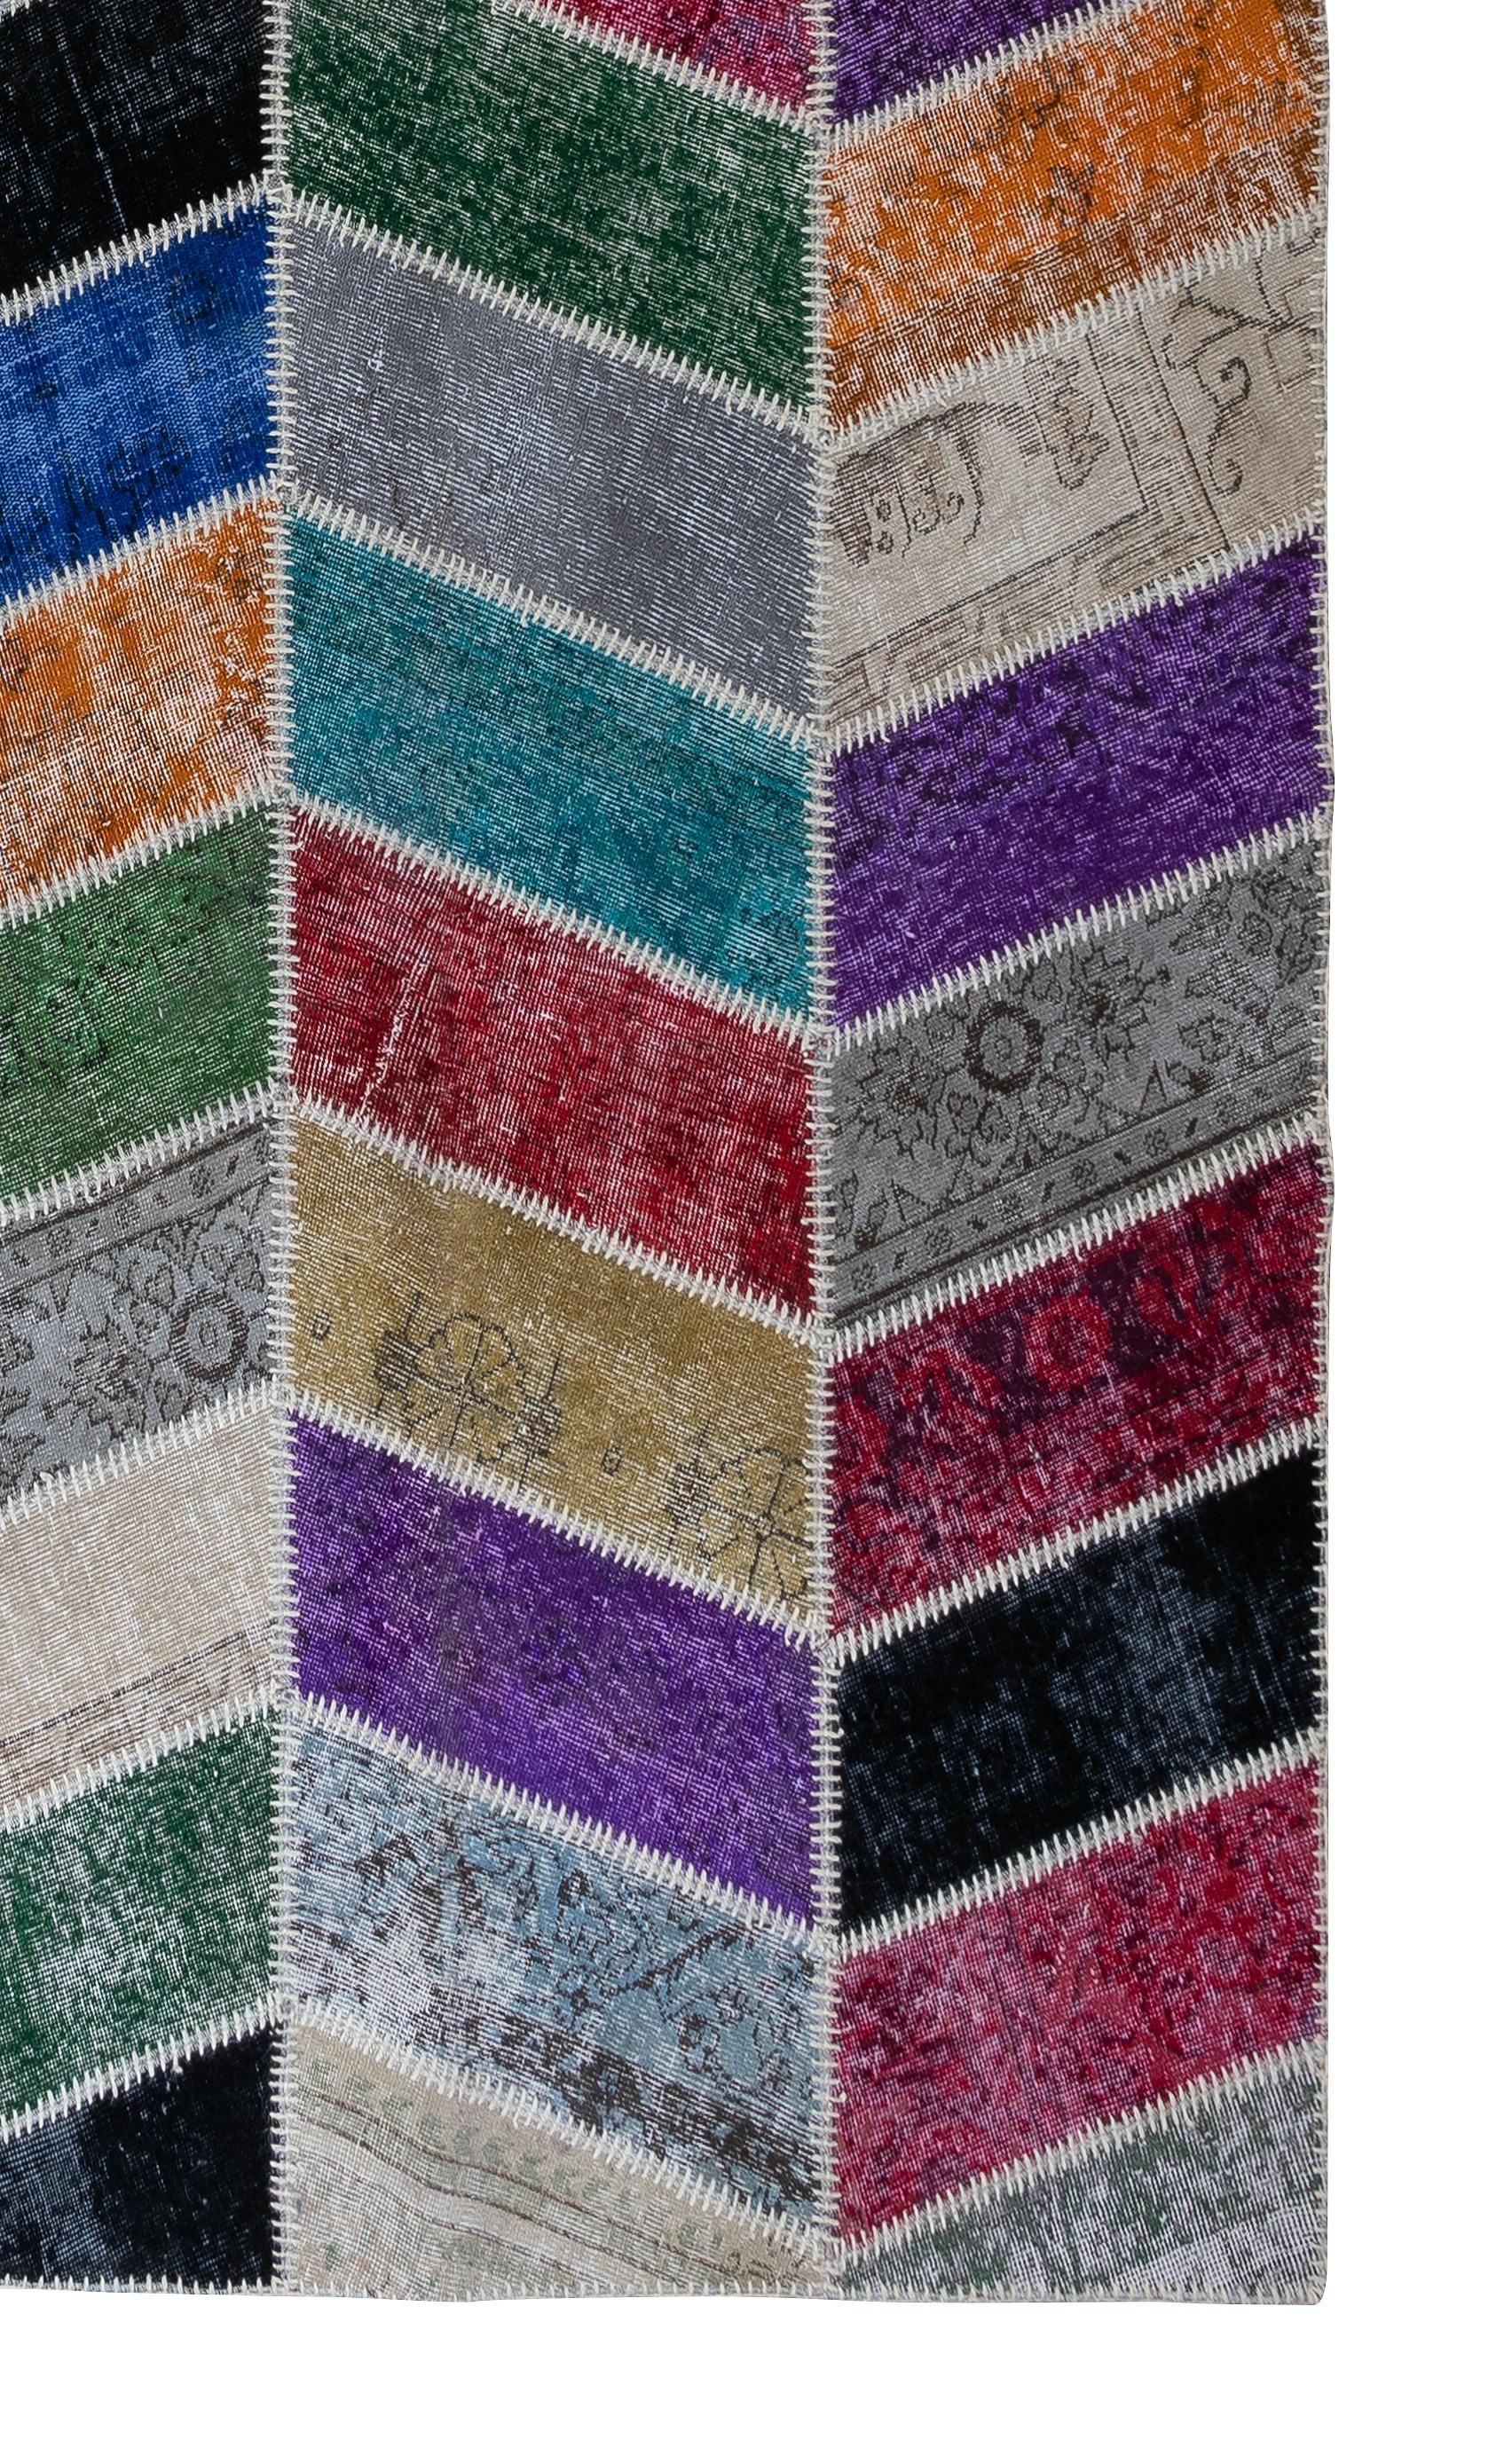 Contemporary Vibrant Handmade Patchwork Rug. Modern Look Colorful Carpet. Custom Options Ava. For Sale